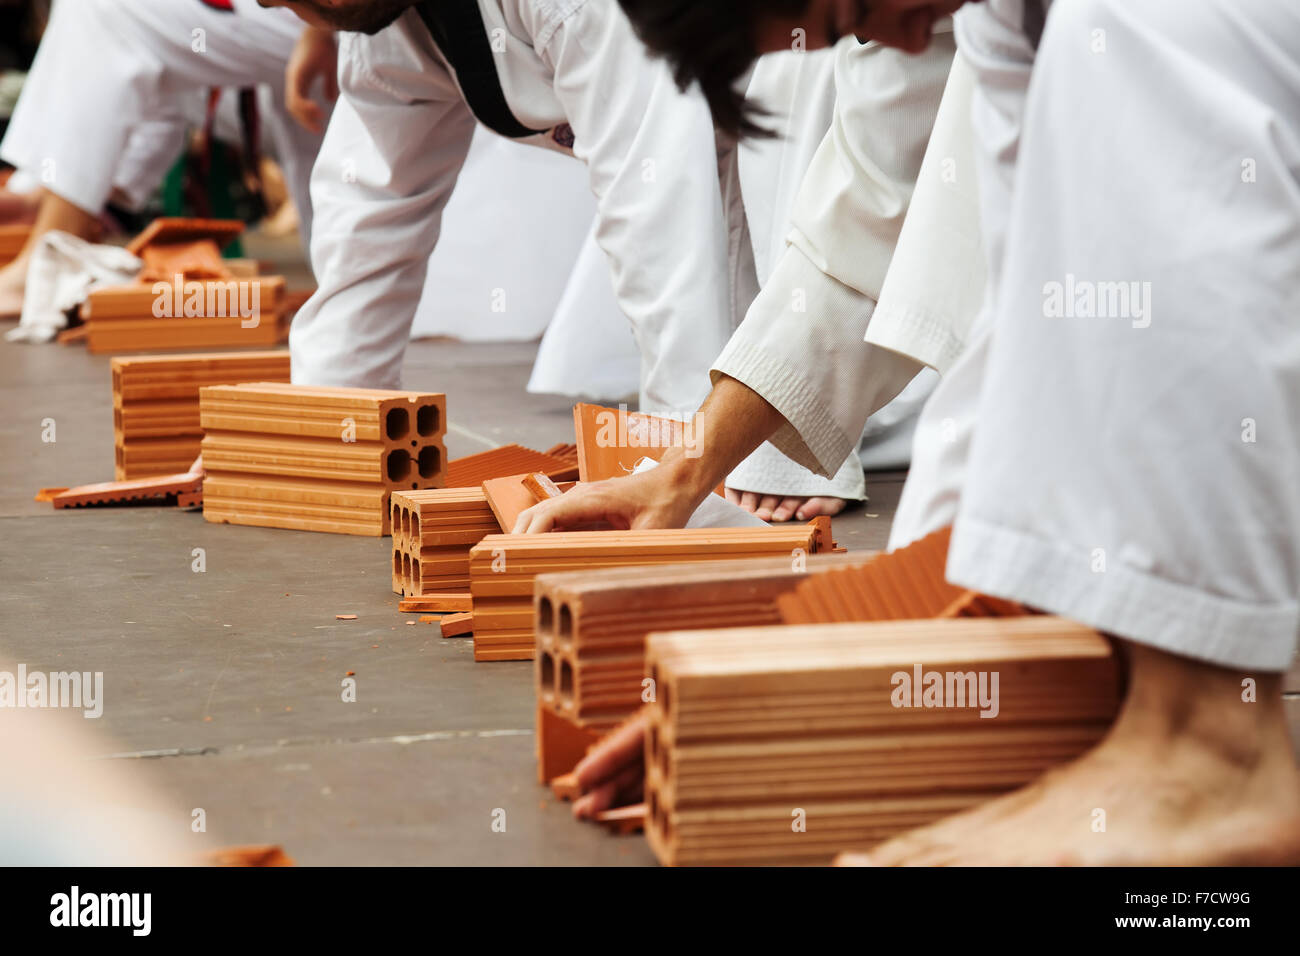 Few karate students show their skills by breaking bricks Stock Photo